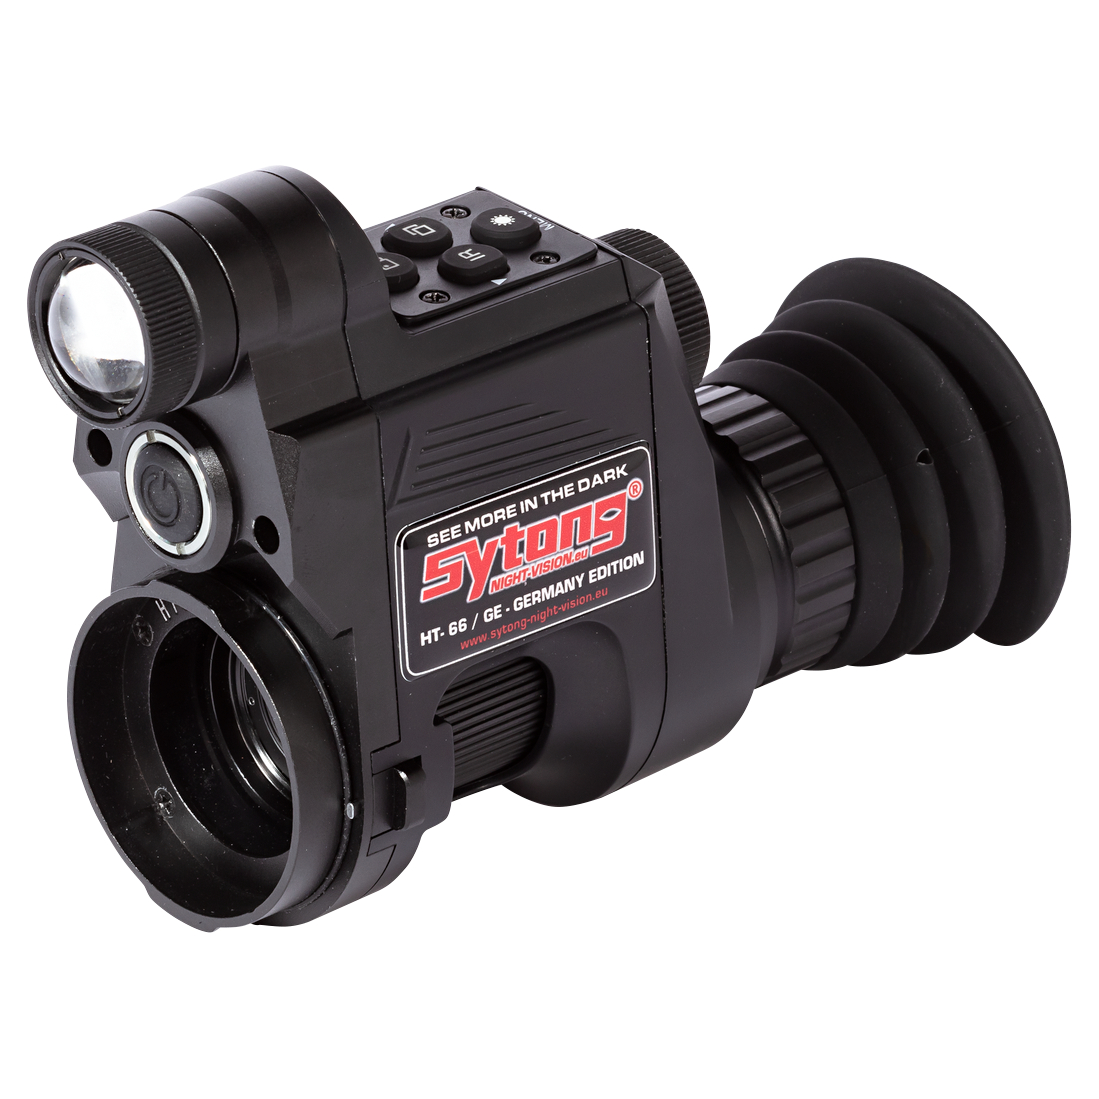 Sytong Night Vision Device HT-66 Lens prices -NV850 German-Edition Shop with low | at mm Hunting Askari 16